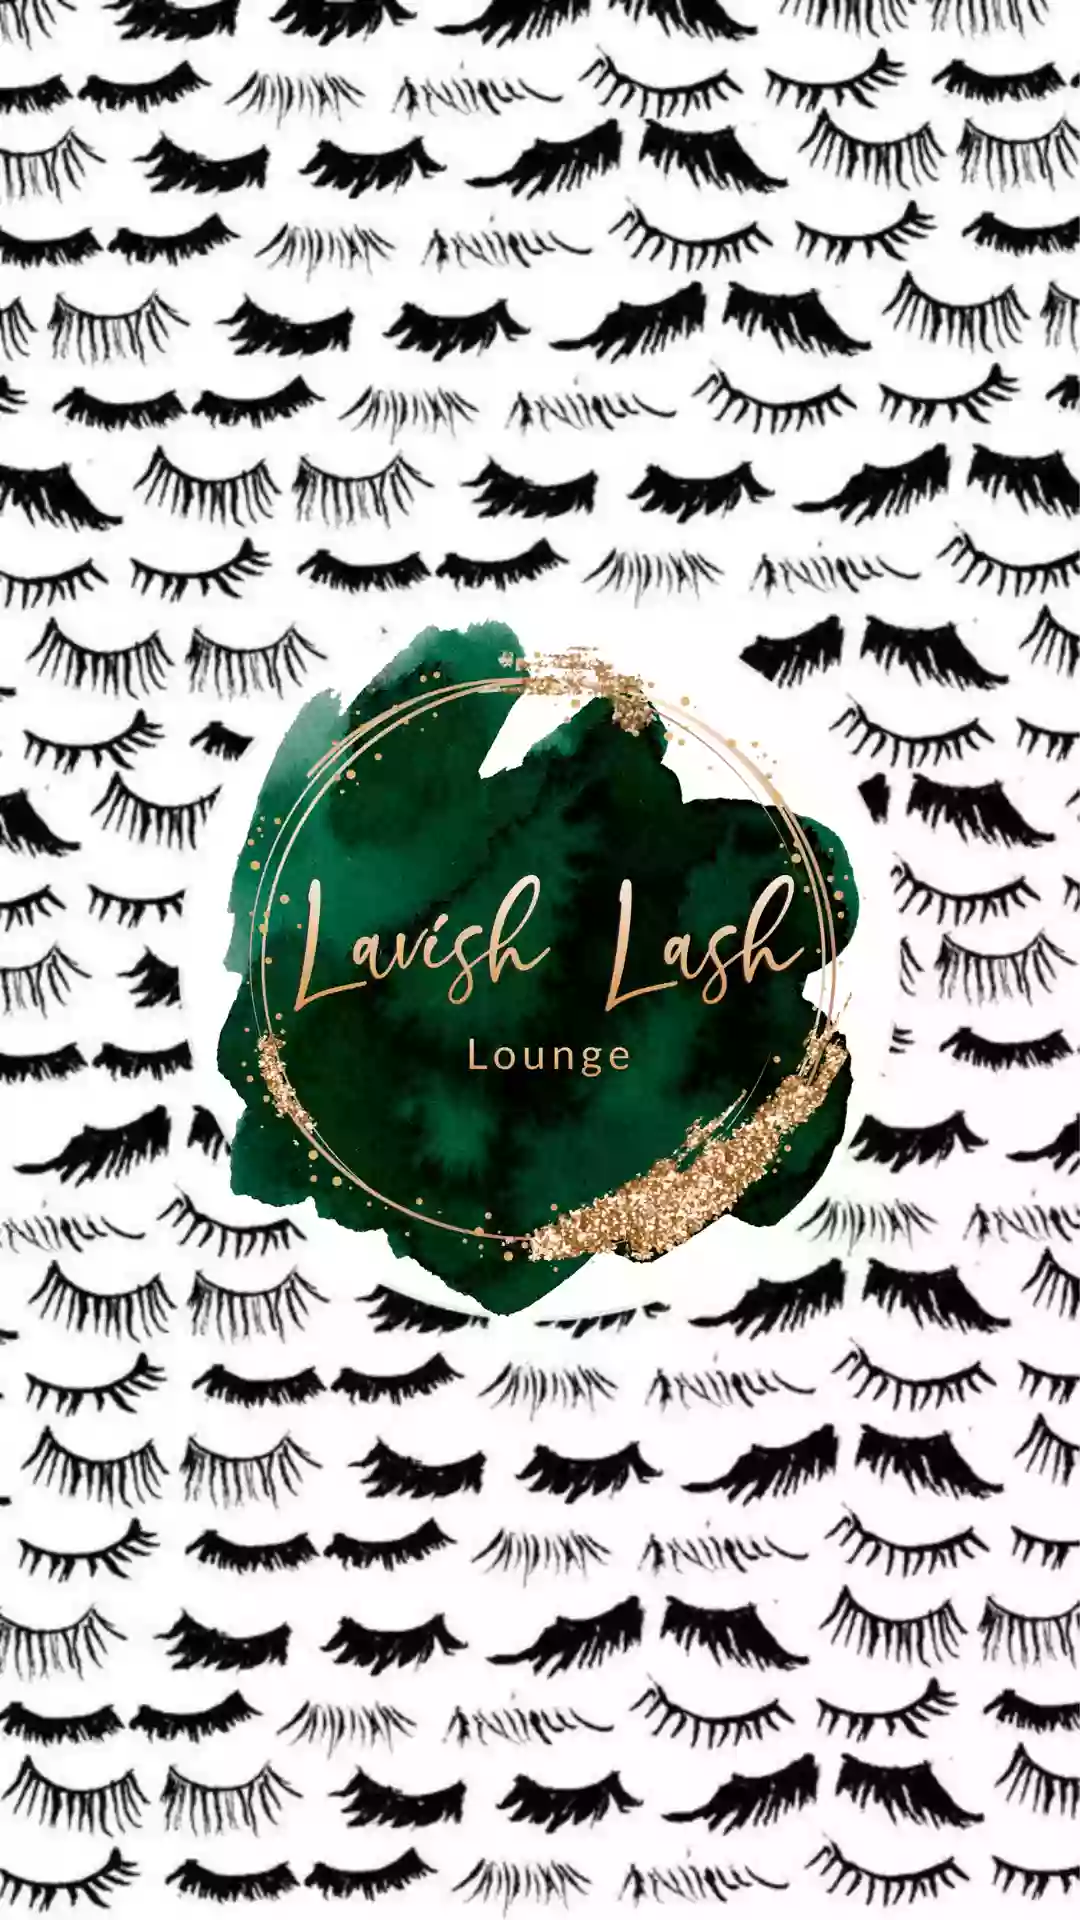 Lavish Lash Lounge